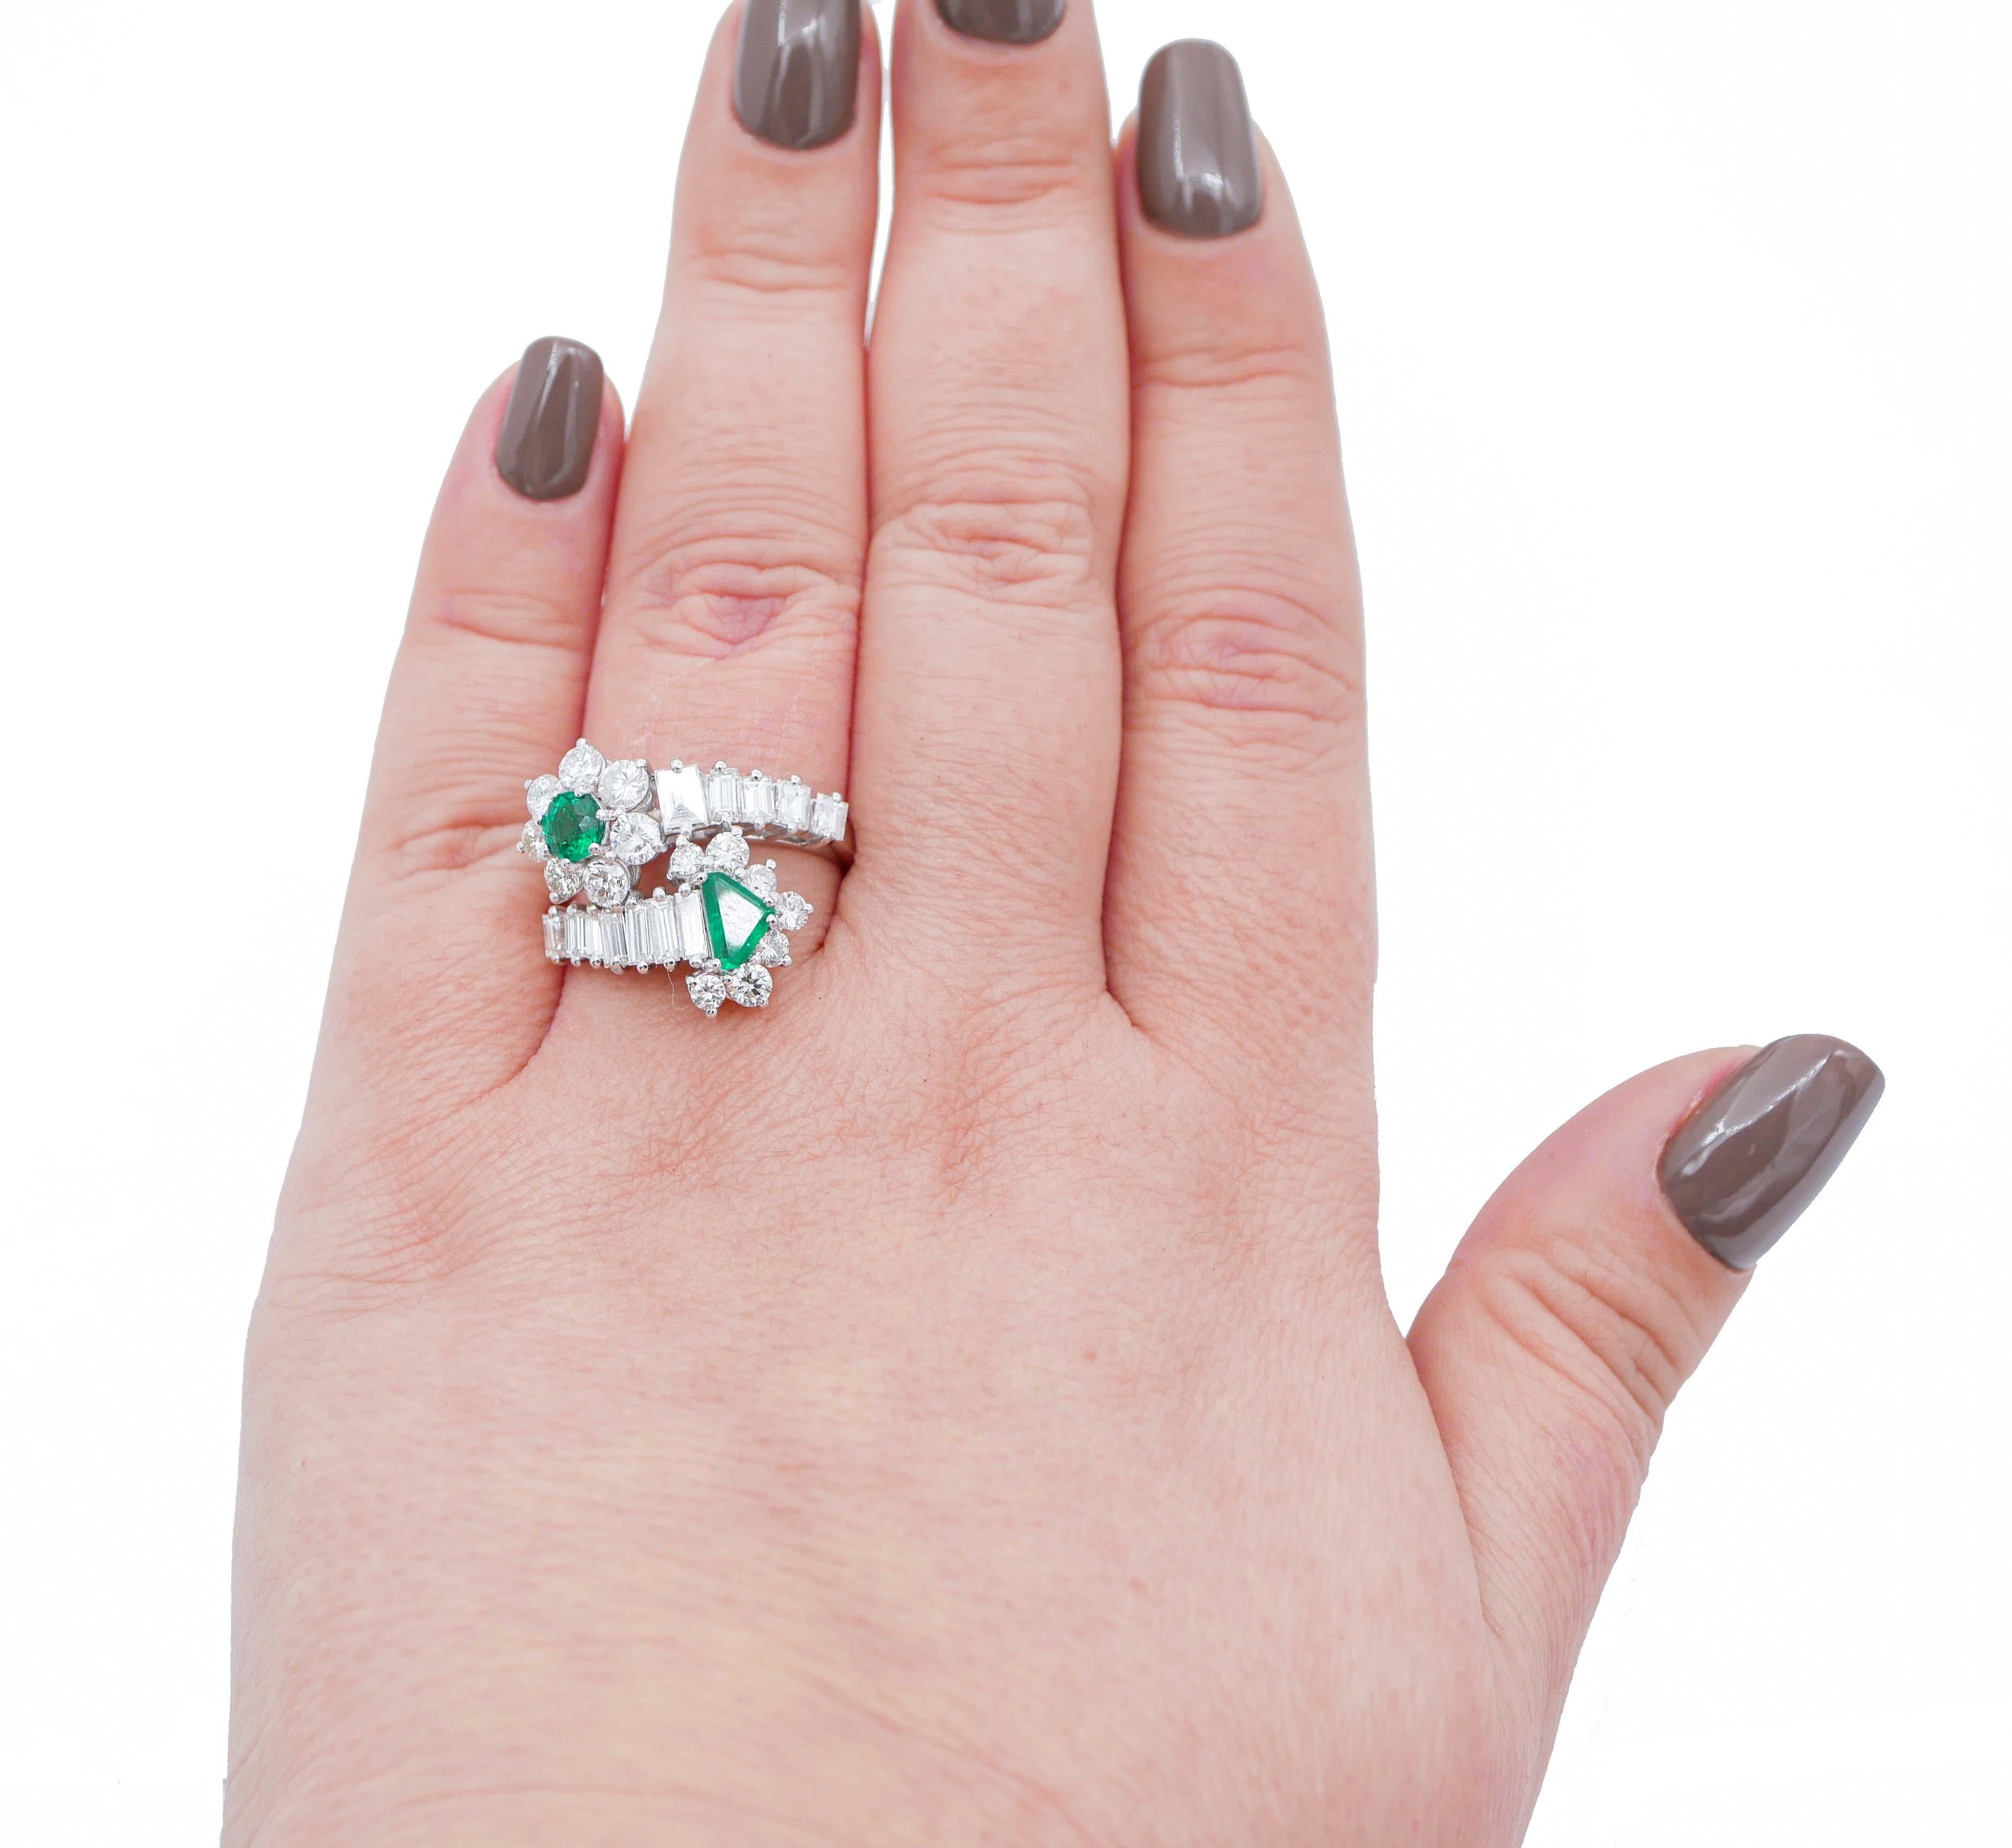 Mixed Cut Emeralds, Diamonds, 18 Karat White Gold Ring